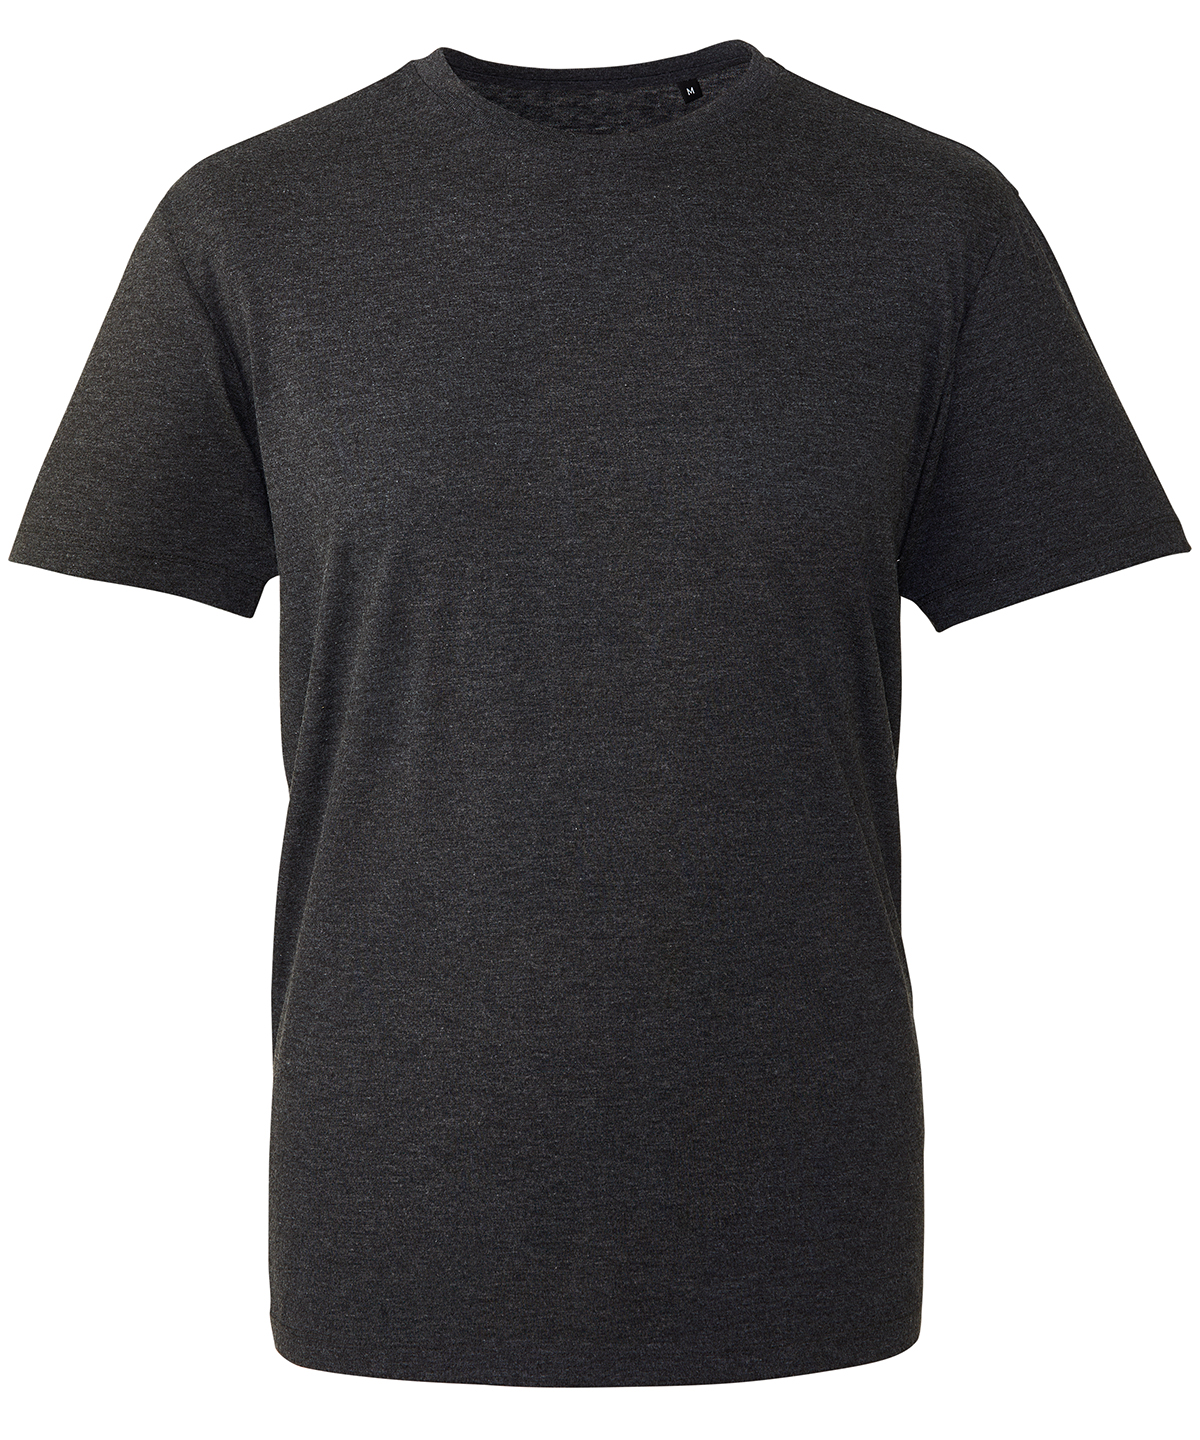 Anthem T-Shirt Black Marl Size 2XLarge